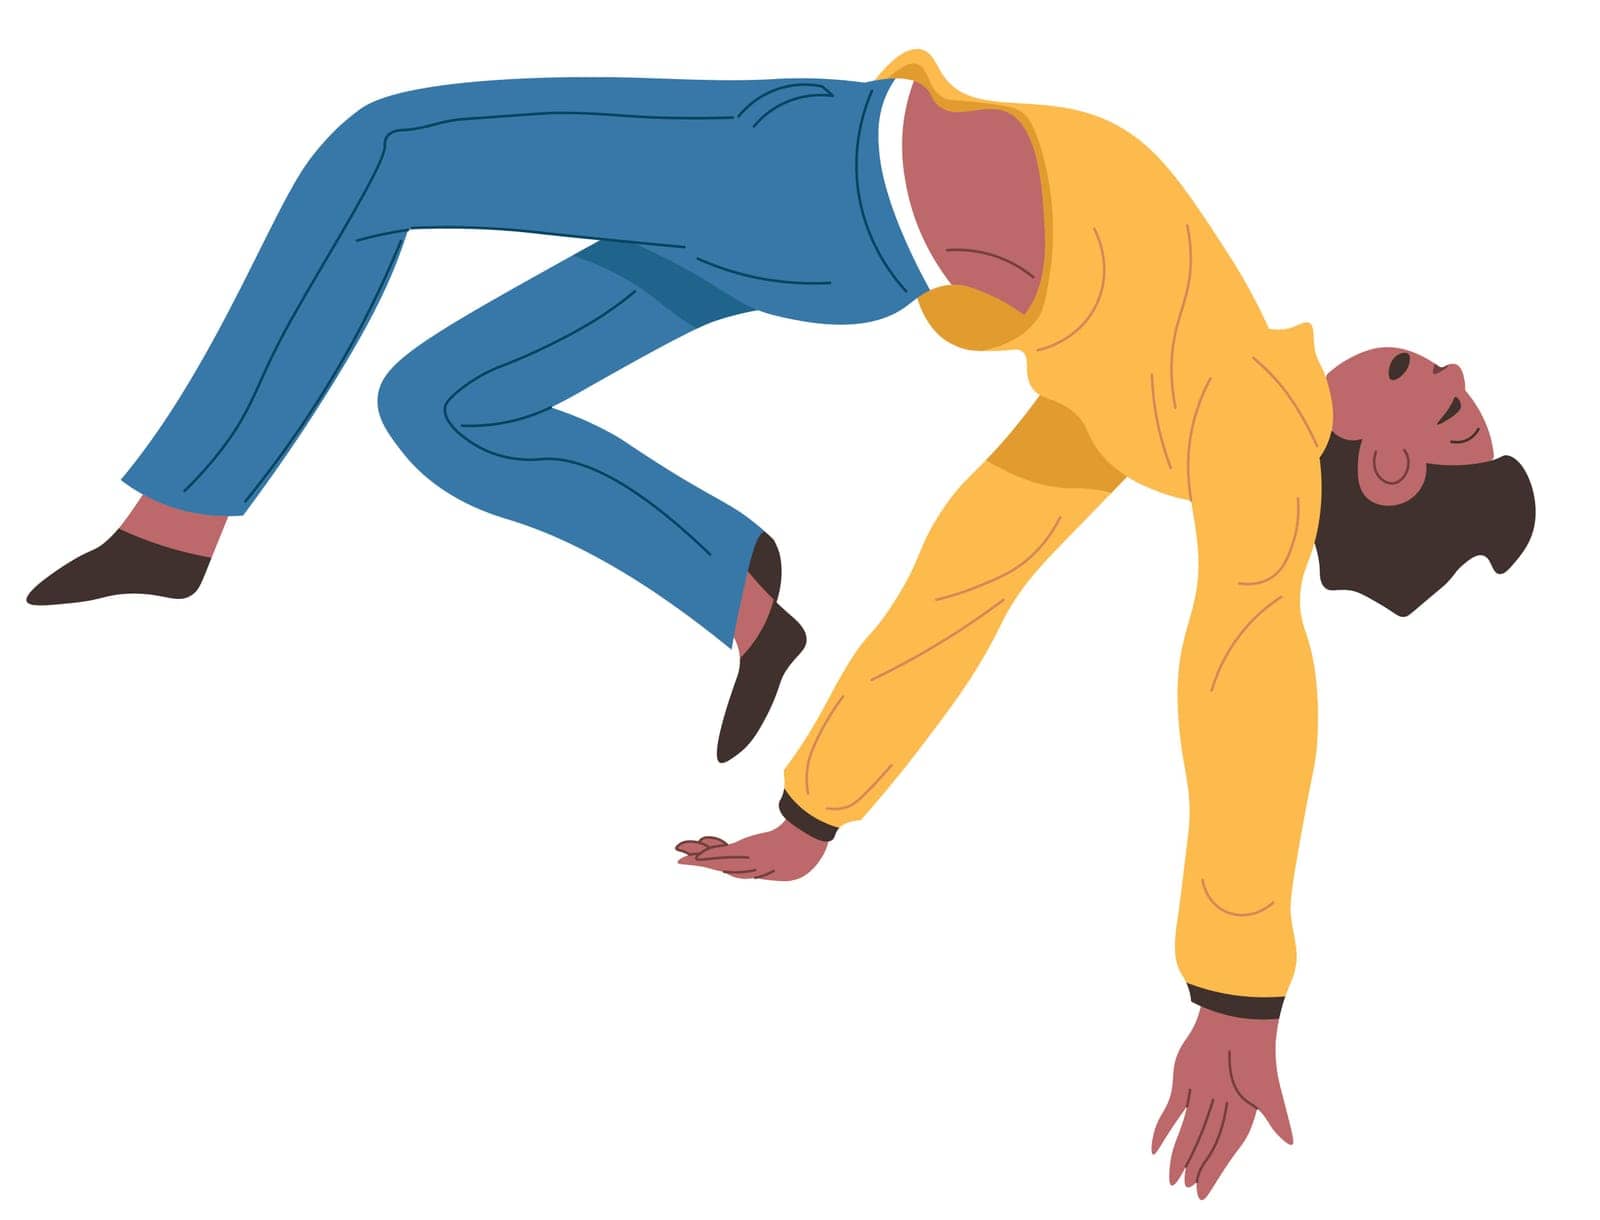 Male character falling down or dancing break style by Sonulkaster